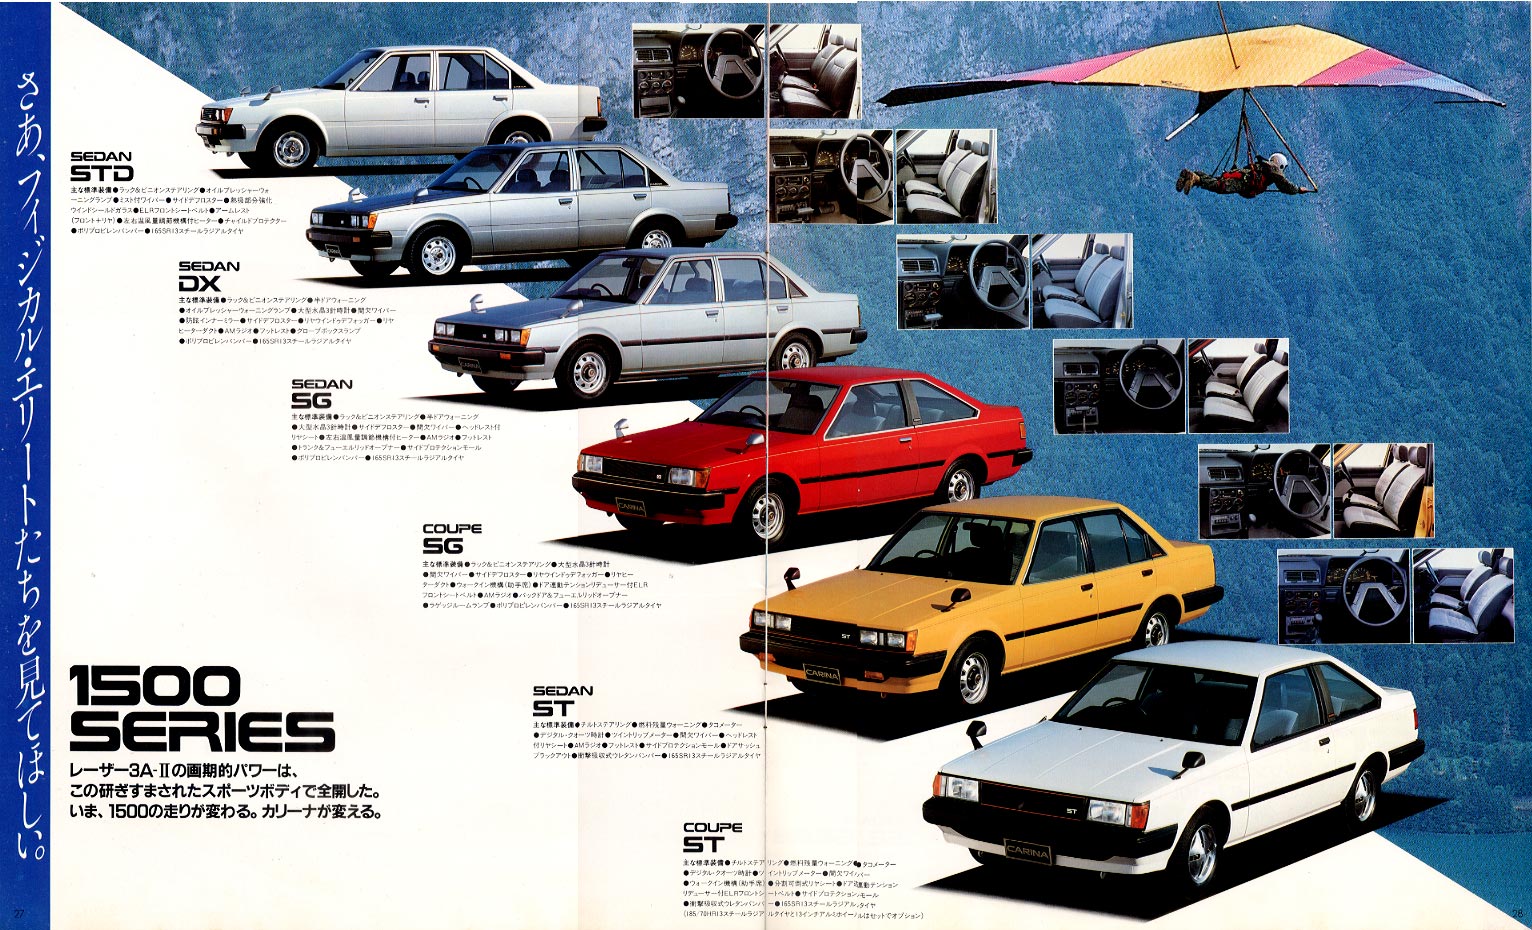 The Toyota Carina sedan range for August 1982